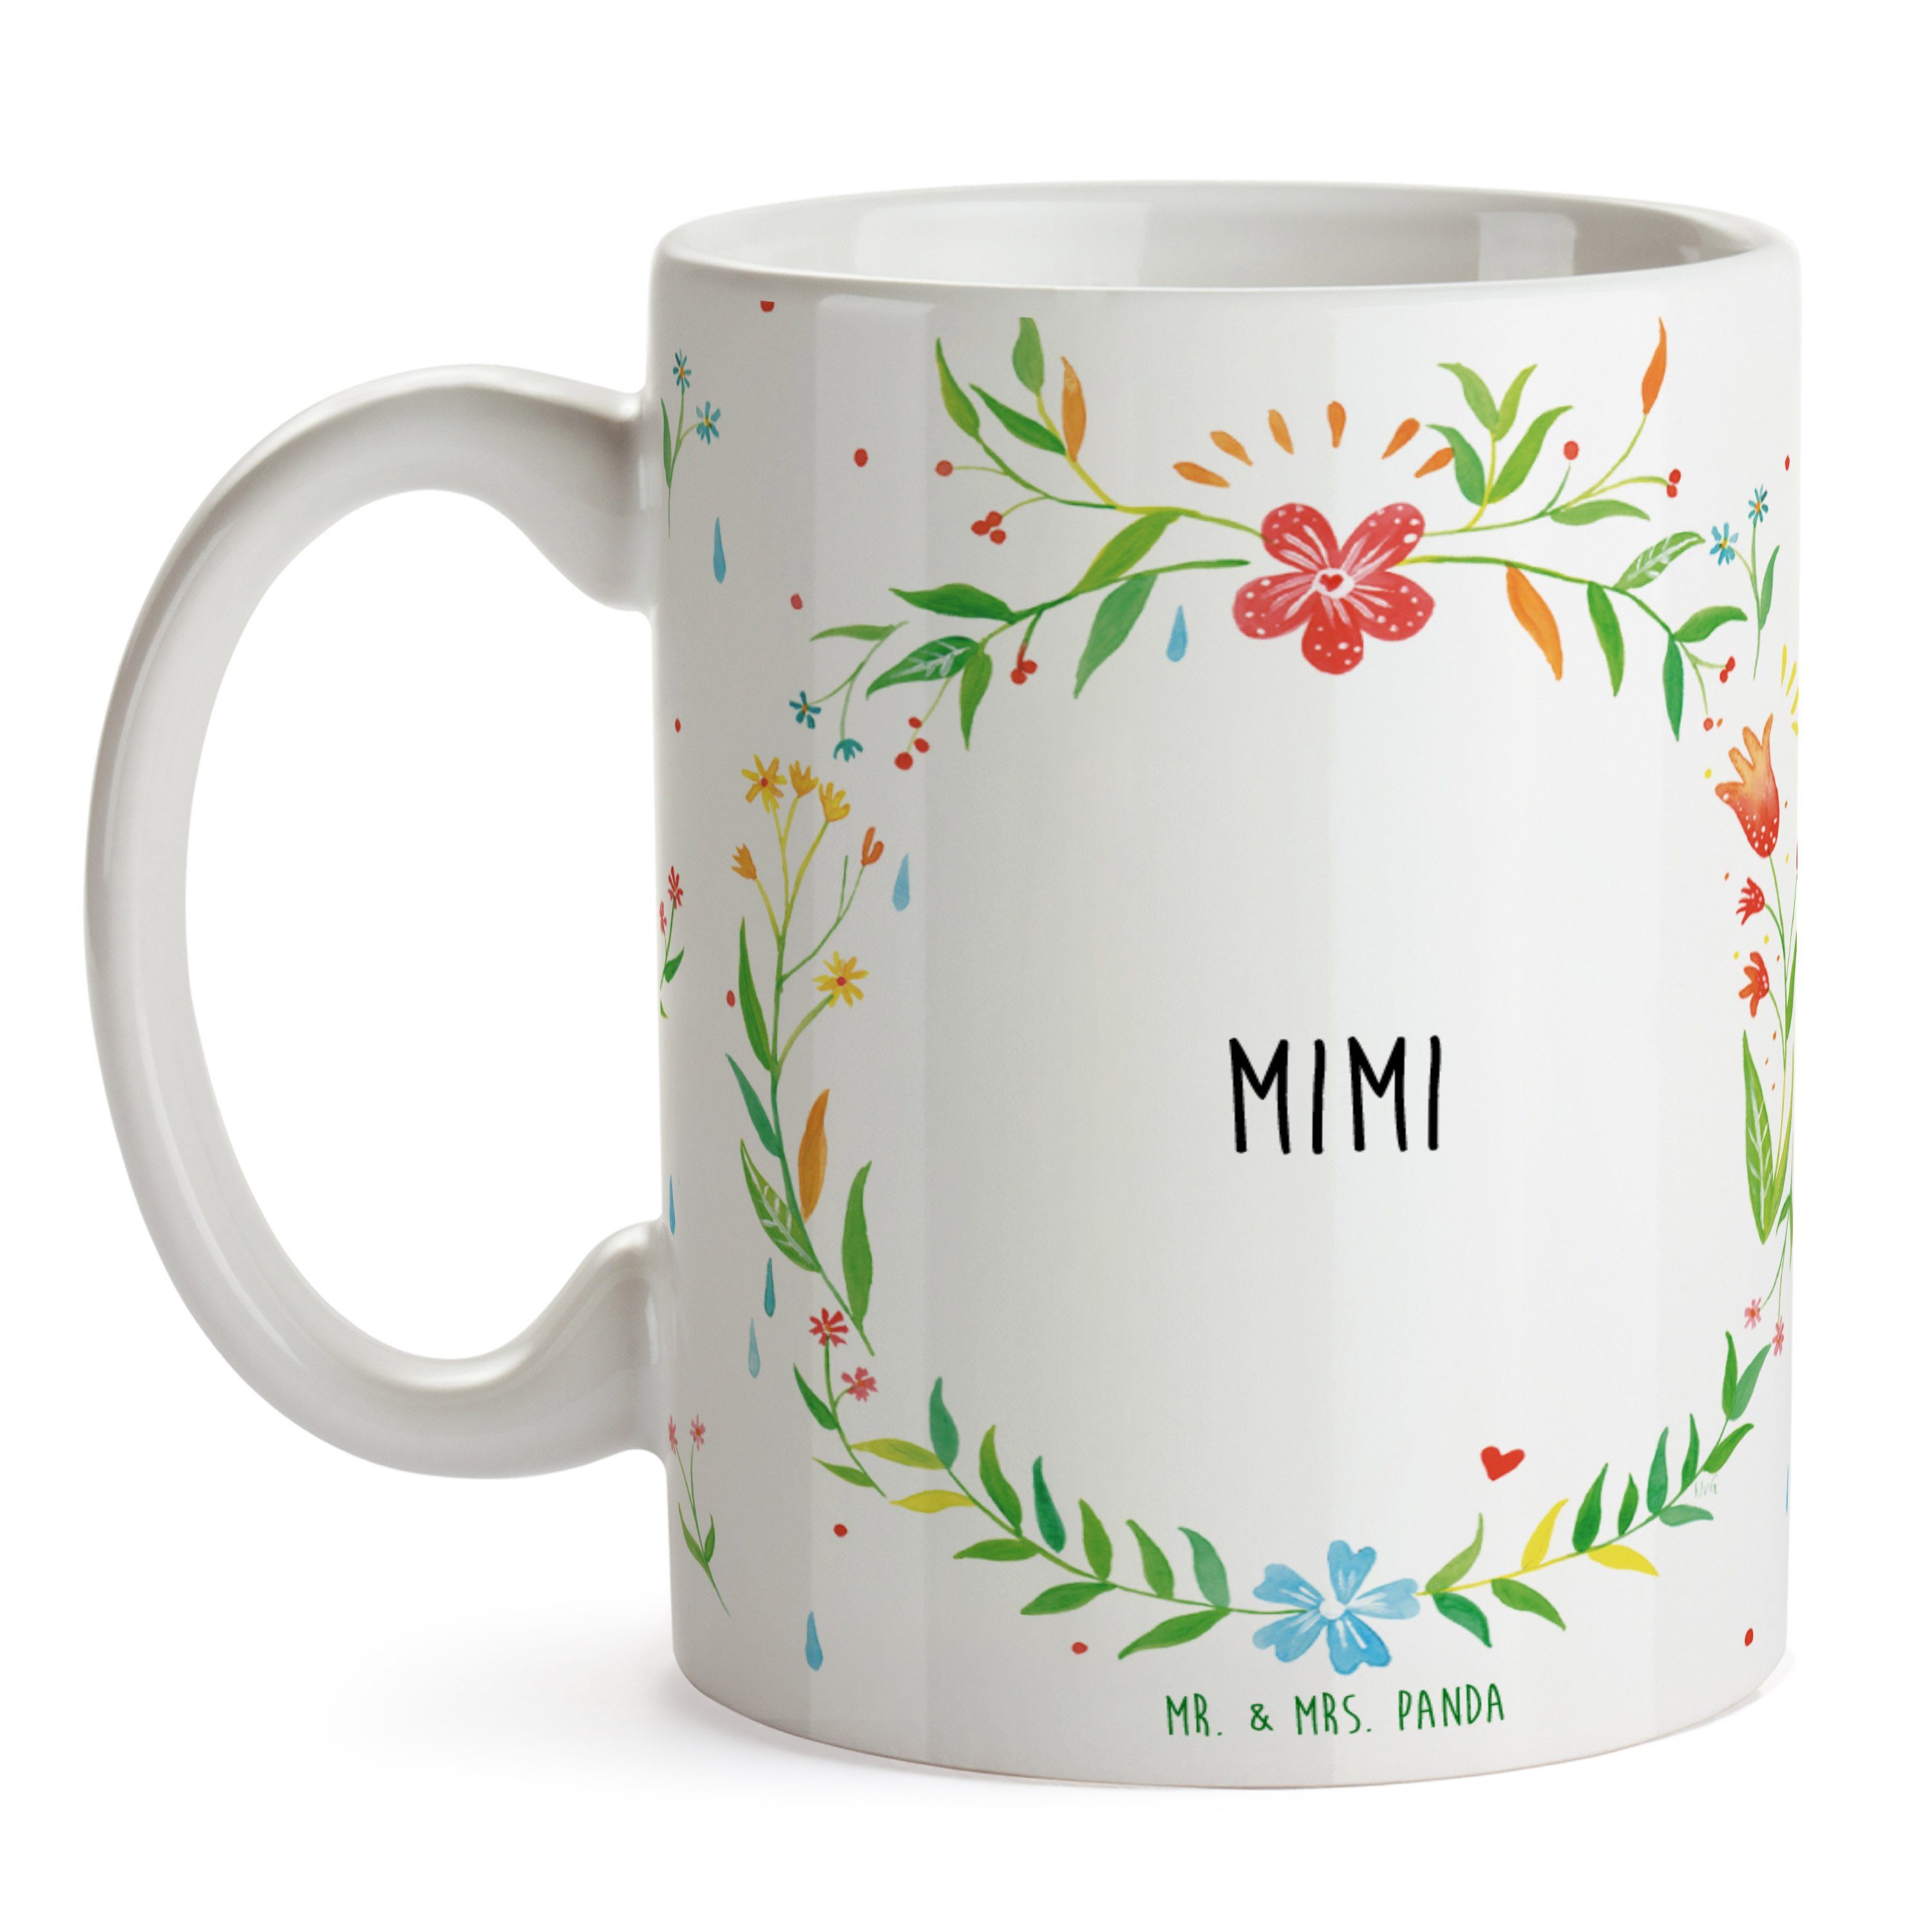 Mr. & Mrs. Panda Tasse - Tasse Keramik Geschenk Tasse, Porzellantasse, Mimi Tasse, Geschenk, Motive